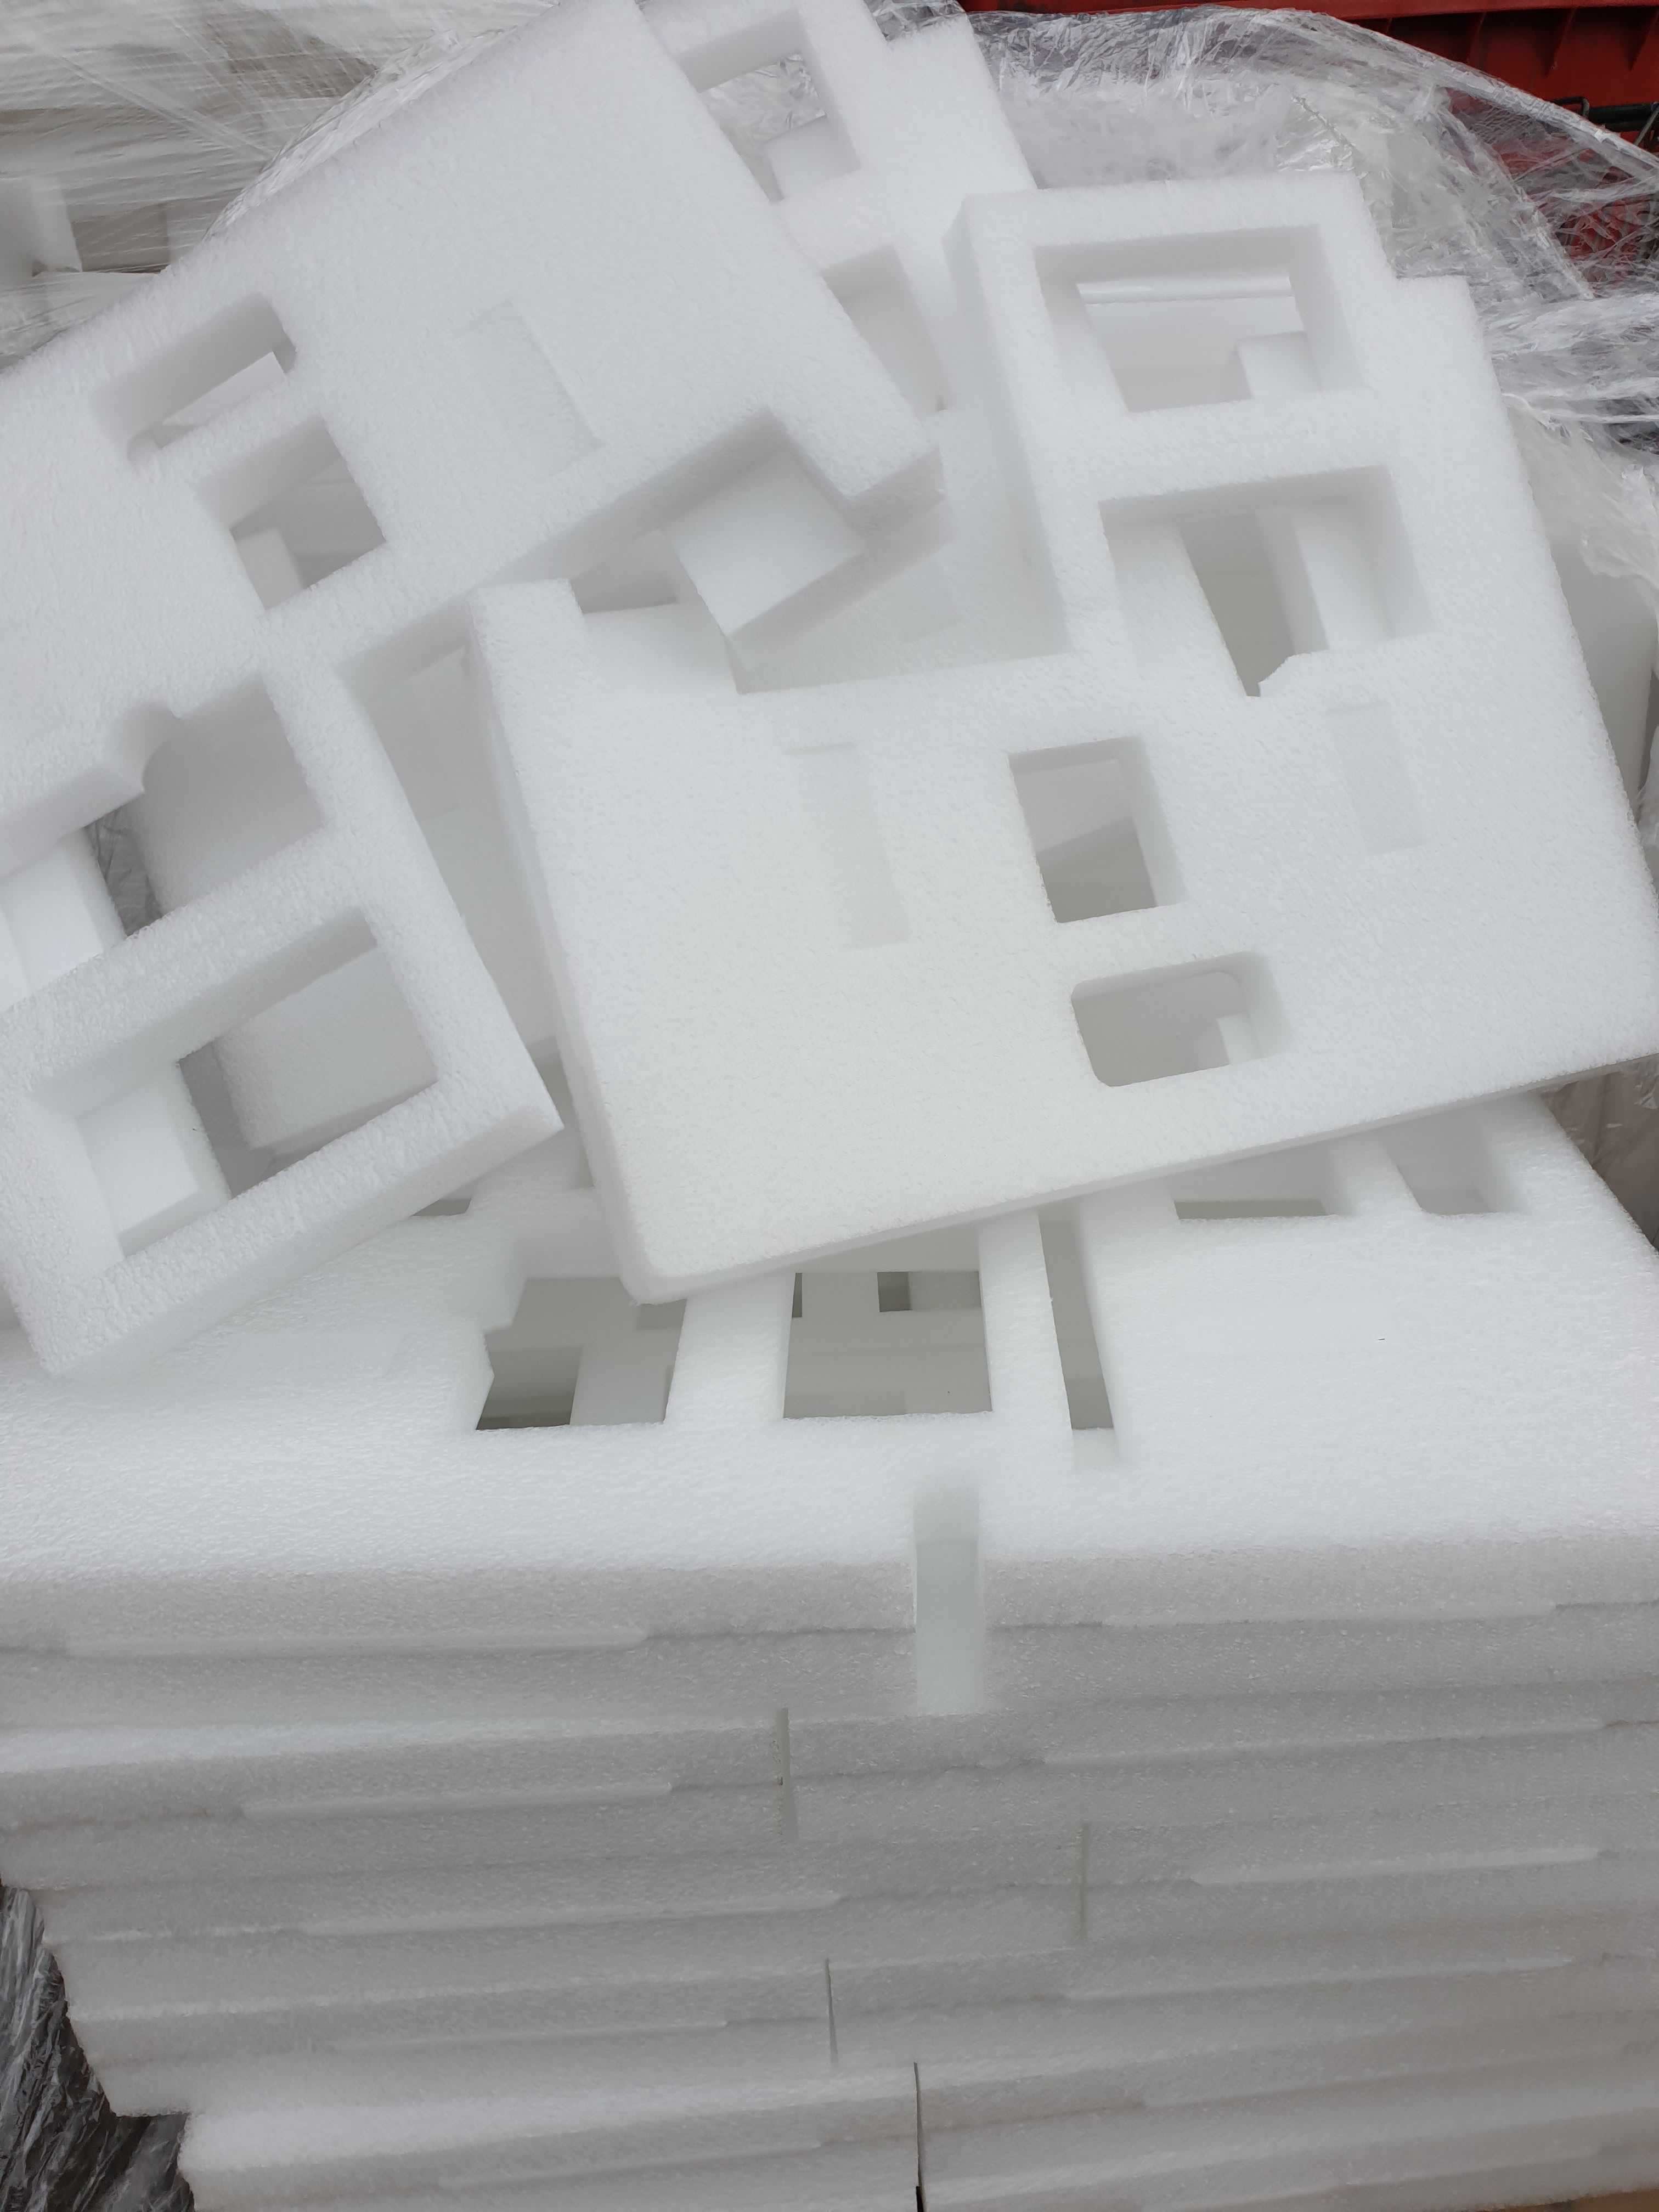 White foam inserts.jpg